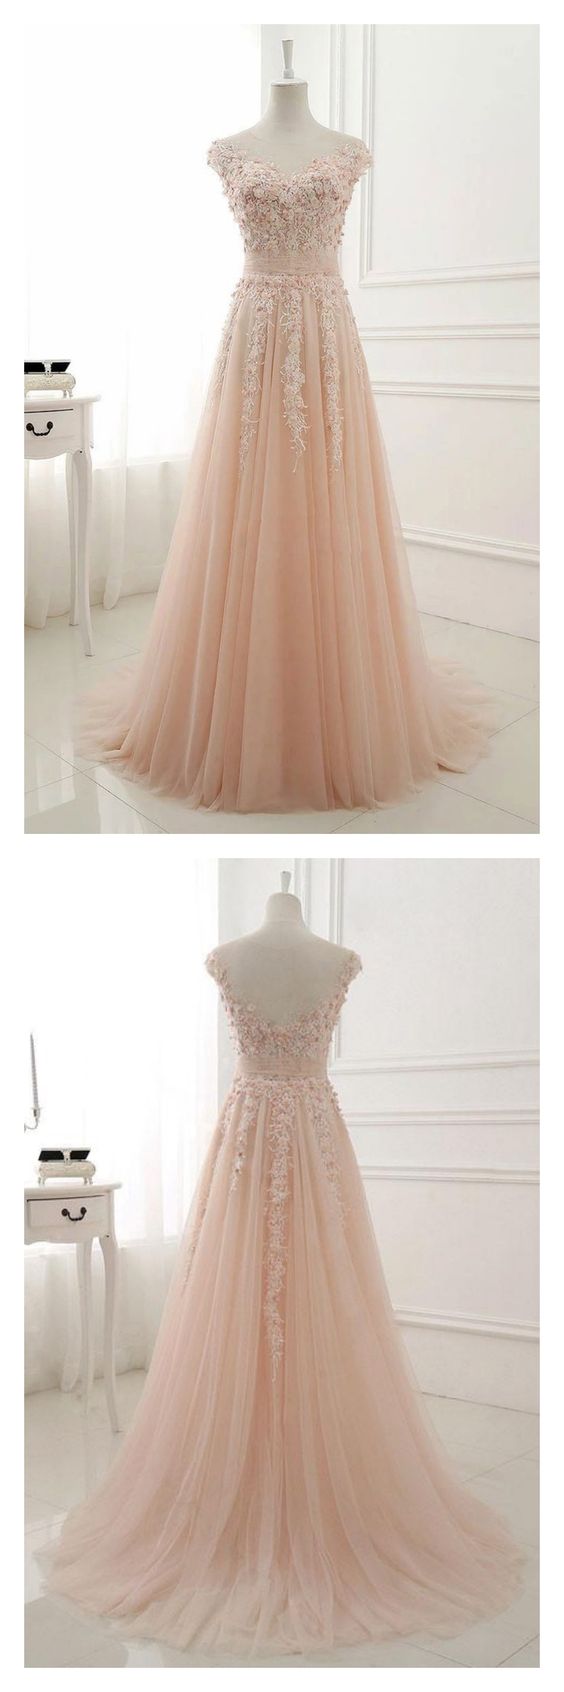 2019 Romantic Floral A-line Tulle Unique Pale Pink Wedding Dress,#711063-Dolly Gown